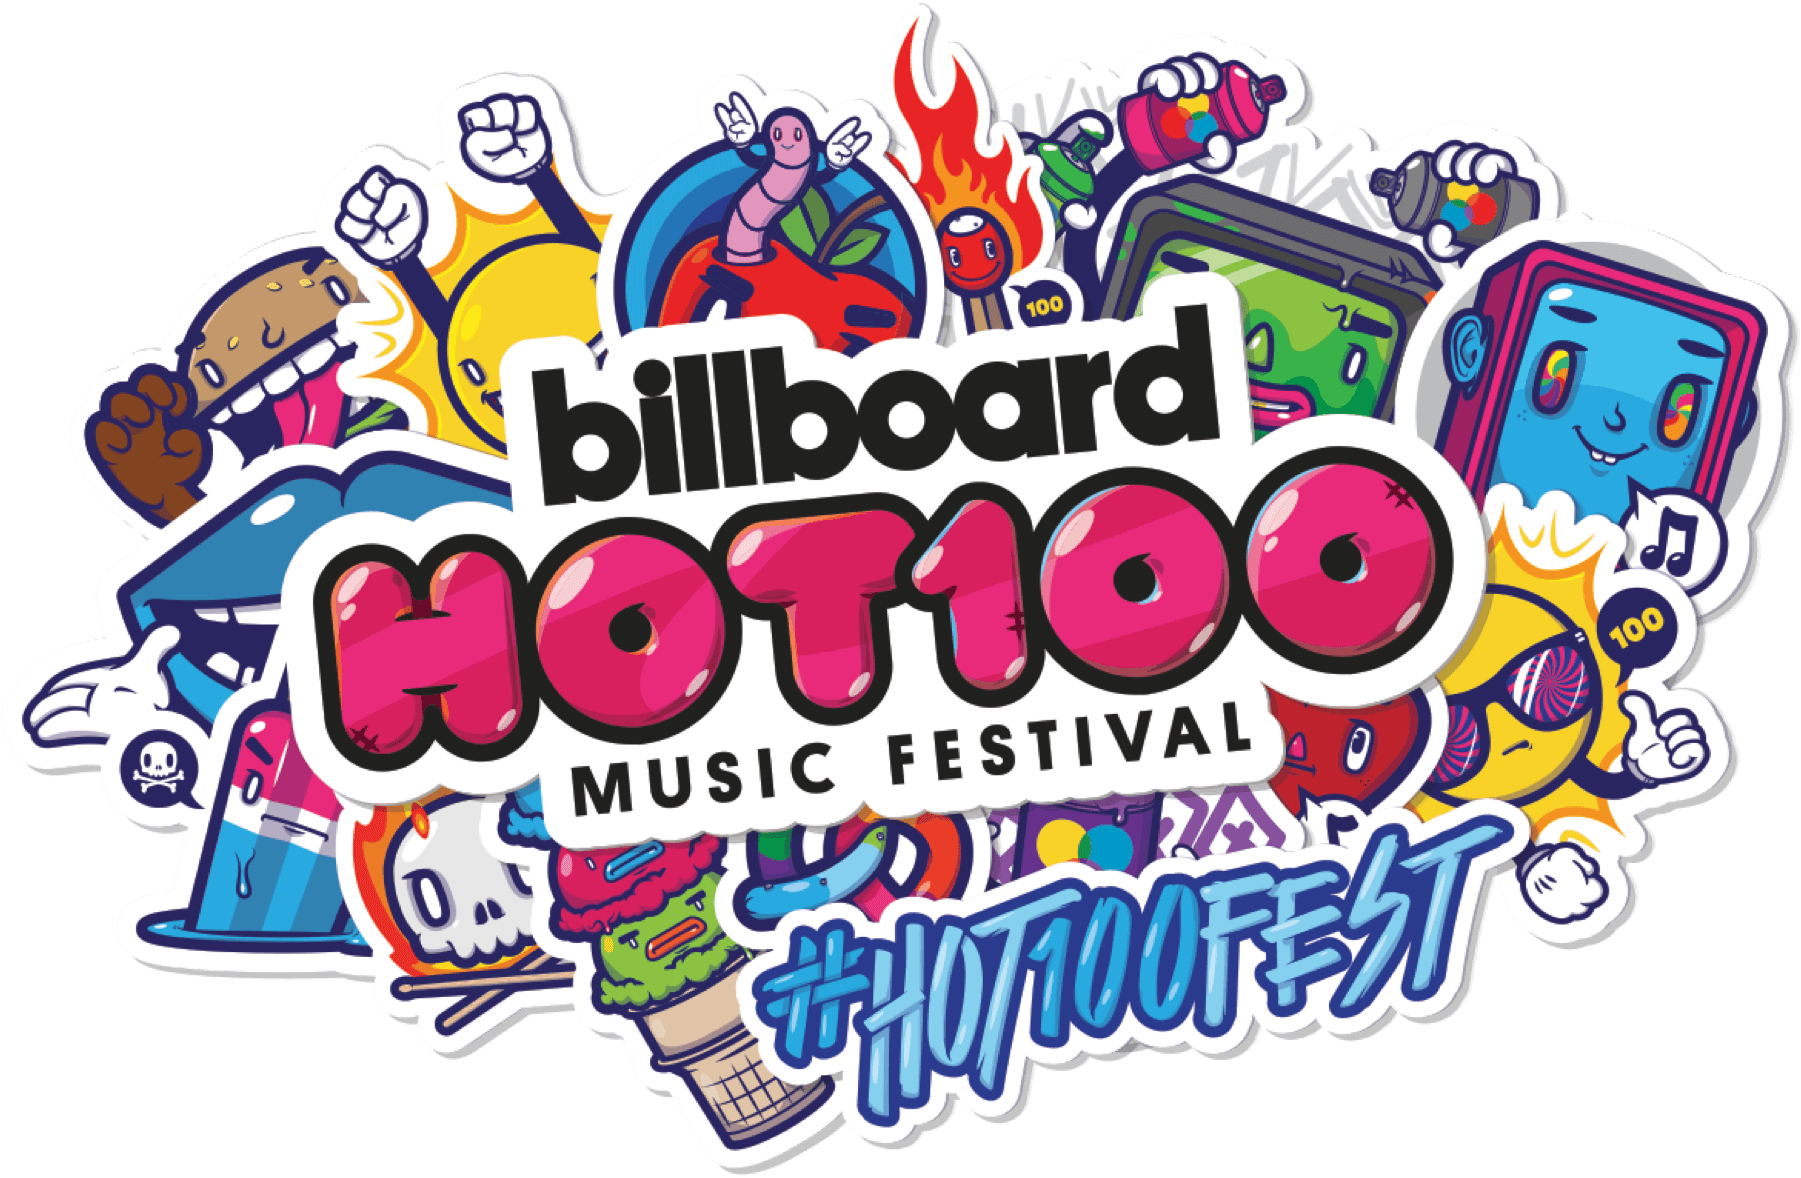 Биллборд хот. Billboard 100. Логотип музыкального фестиваля. Hot 100. Billboard hot.